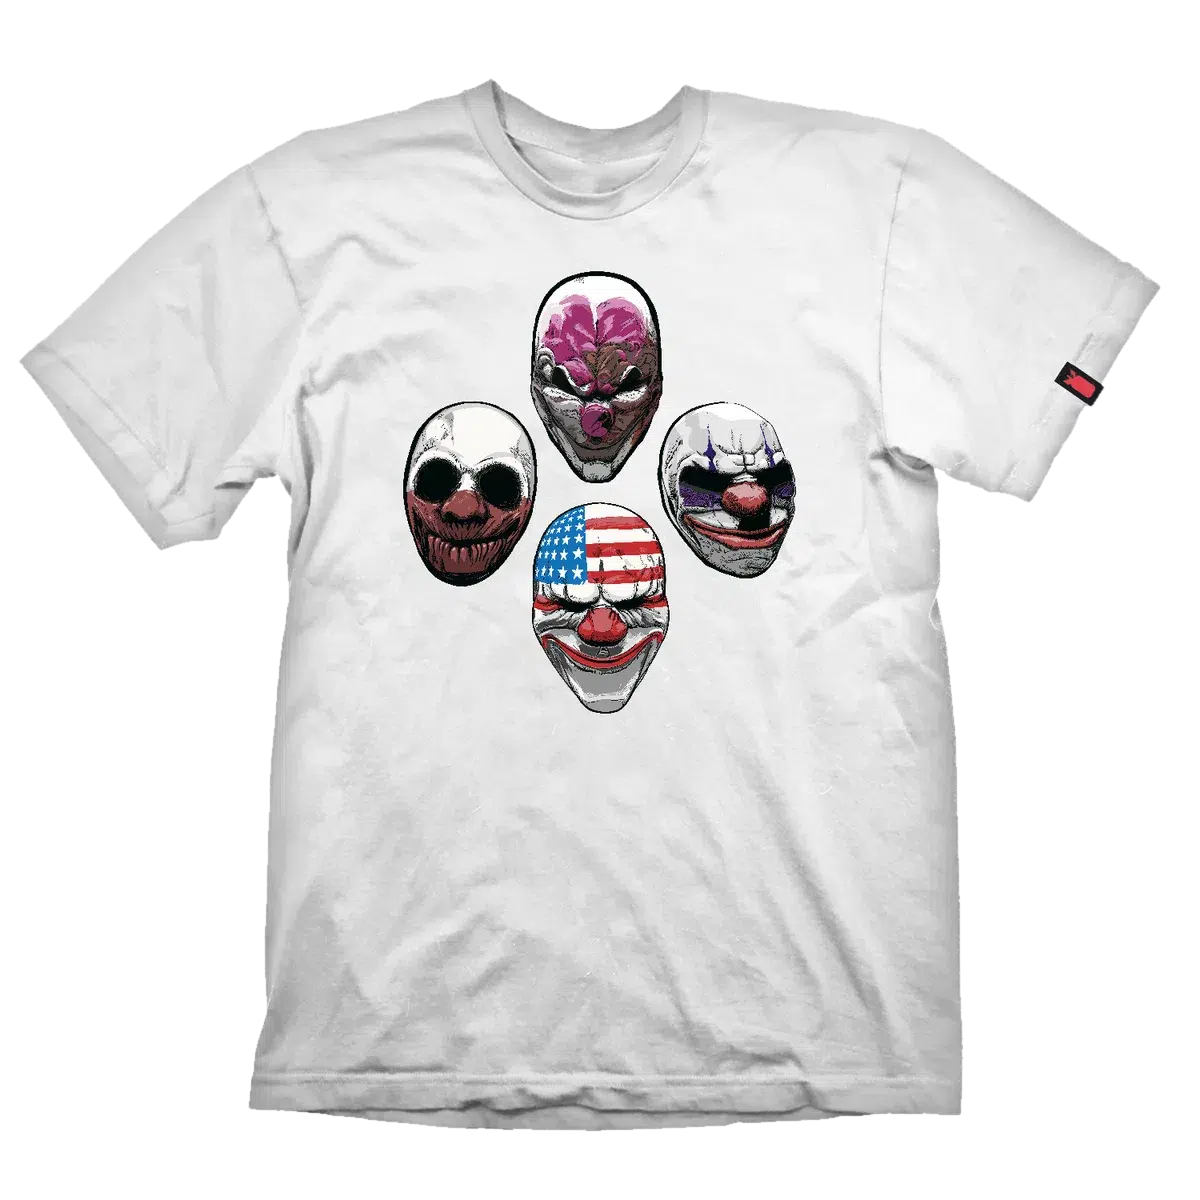 Payday 2 T-Shirt "The Four" White XXL